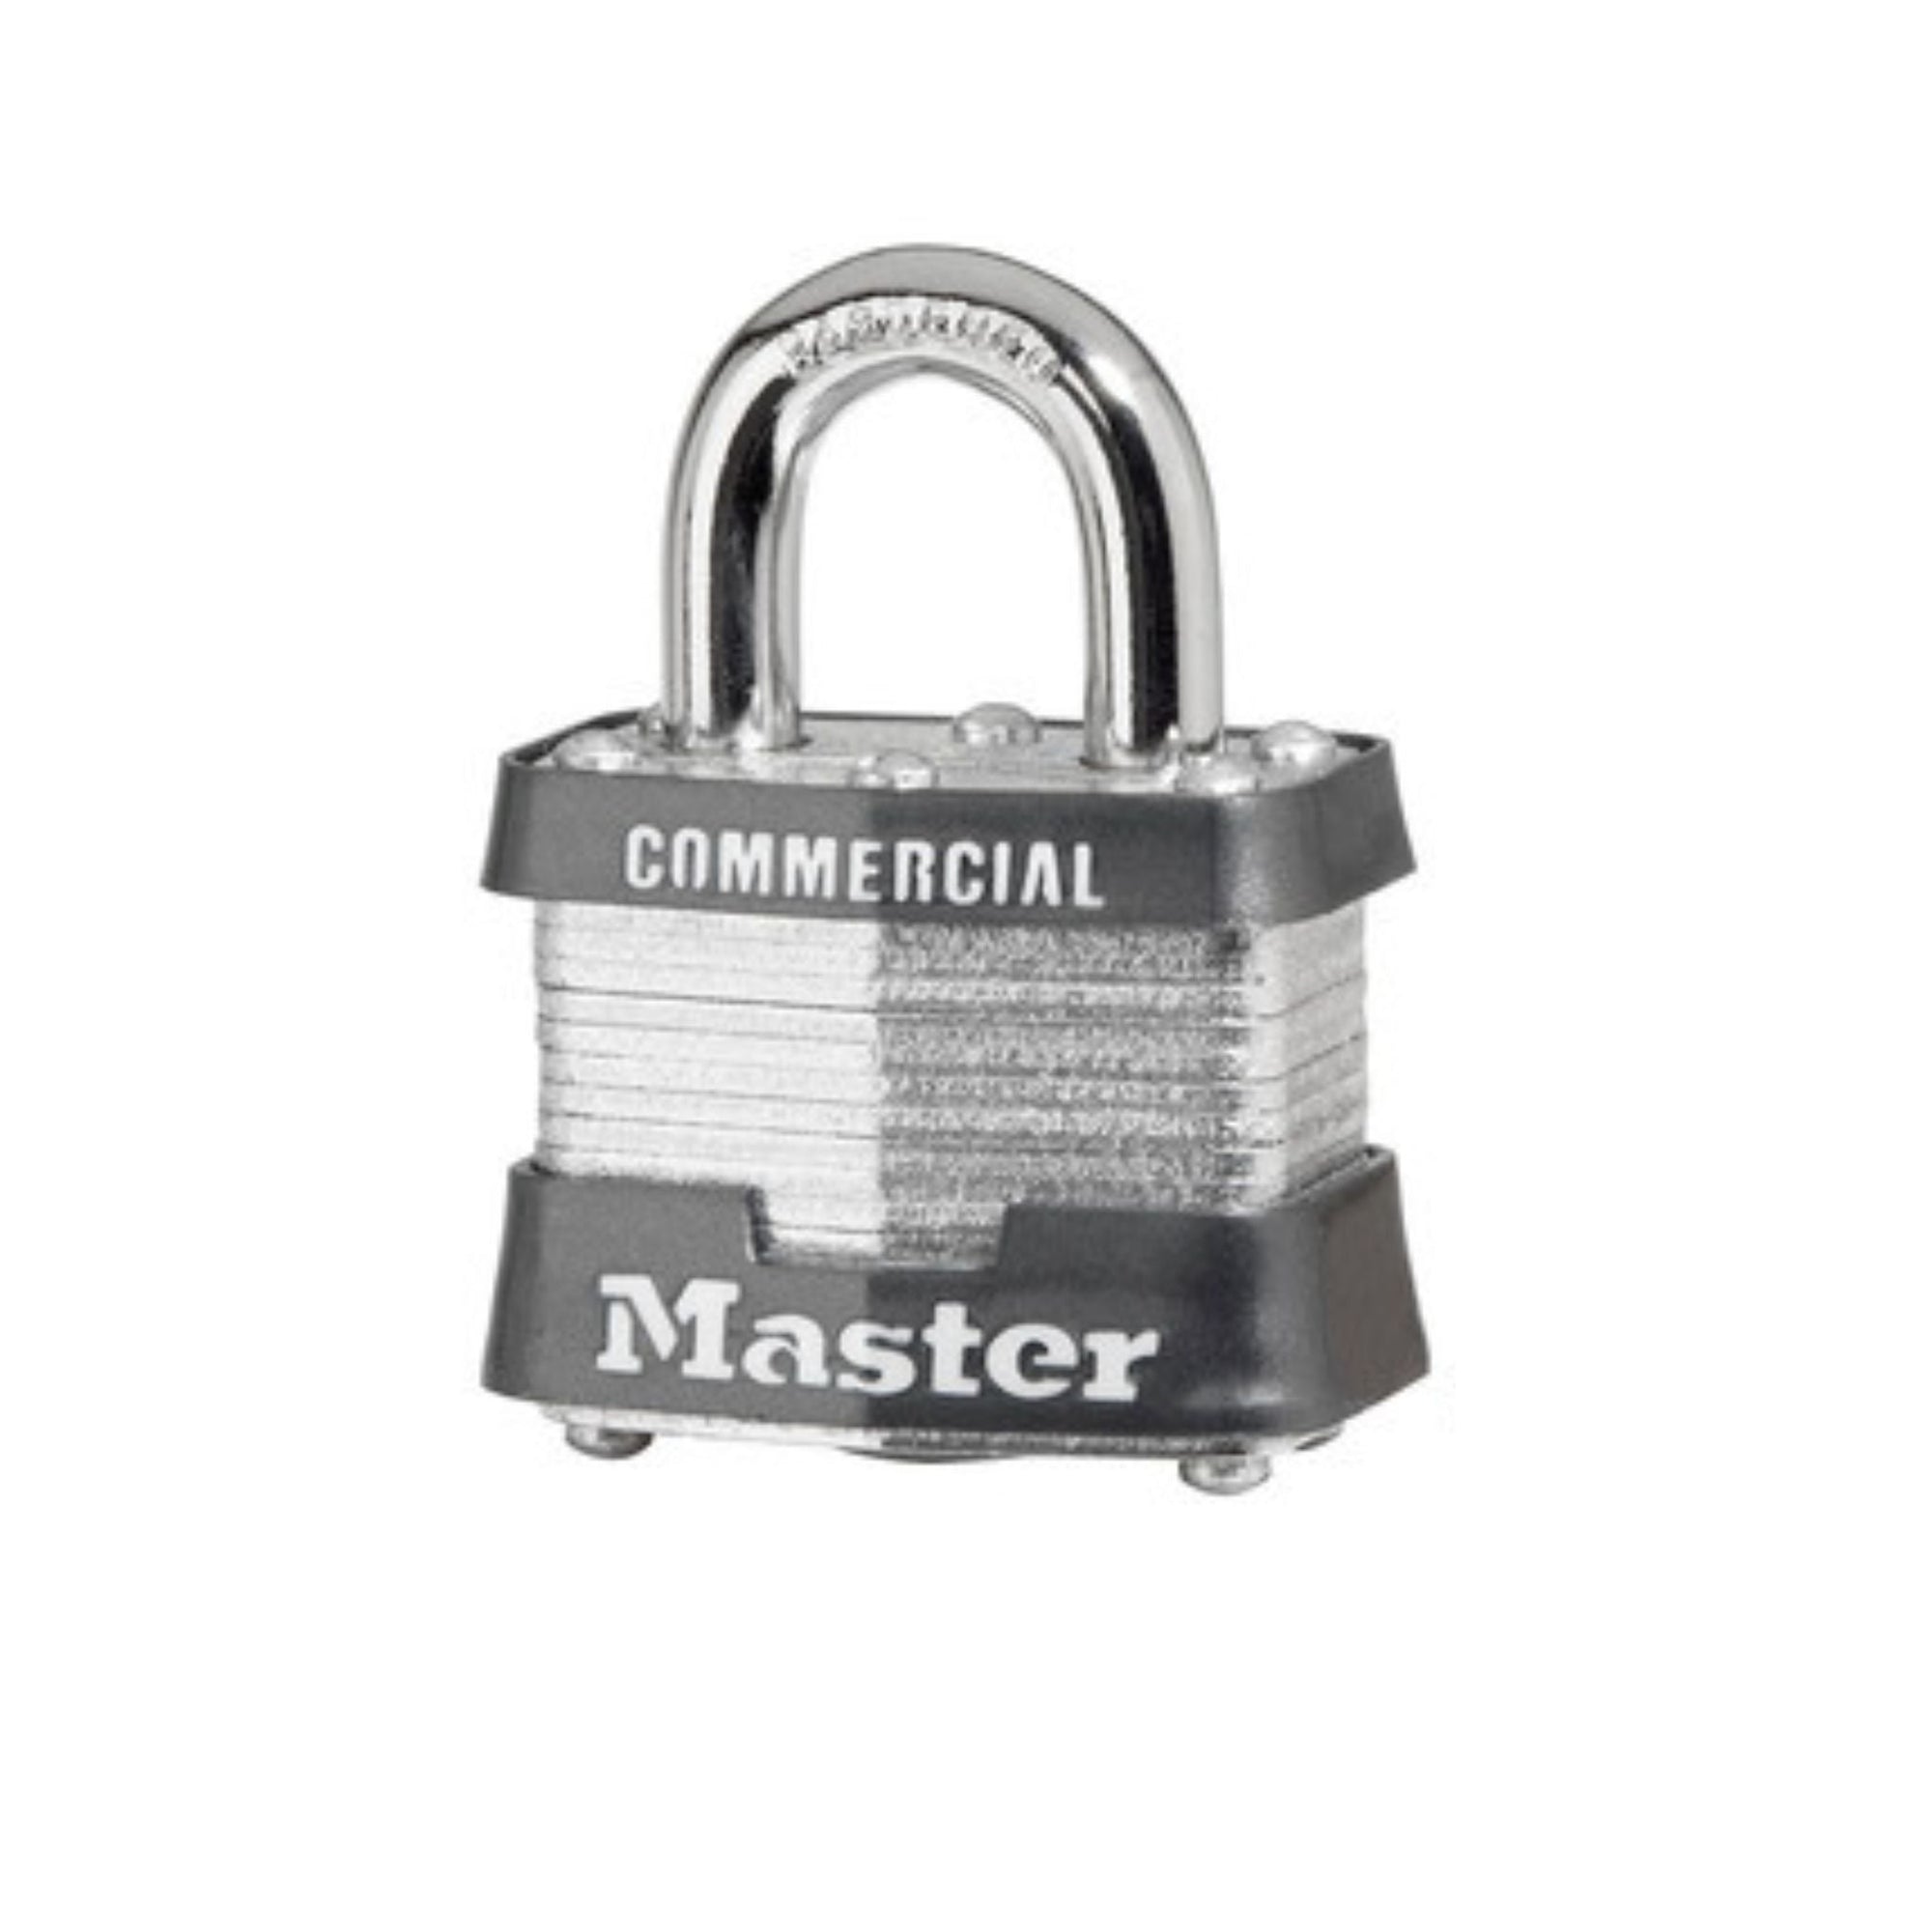 Master Lock 3KA 0306 Lock Laminated steel No. 3 Series Padlock Keyed to Match Existing Key Number KA0306 - The Lock Source